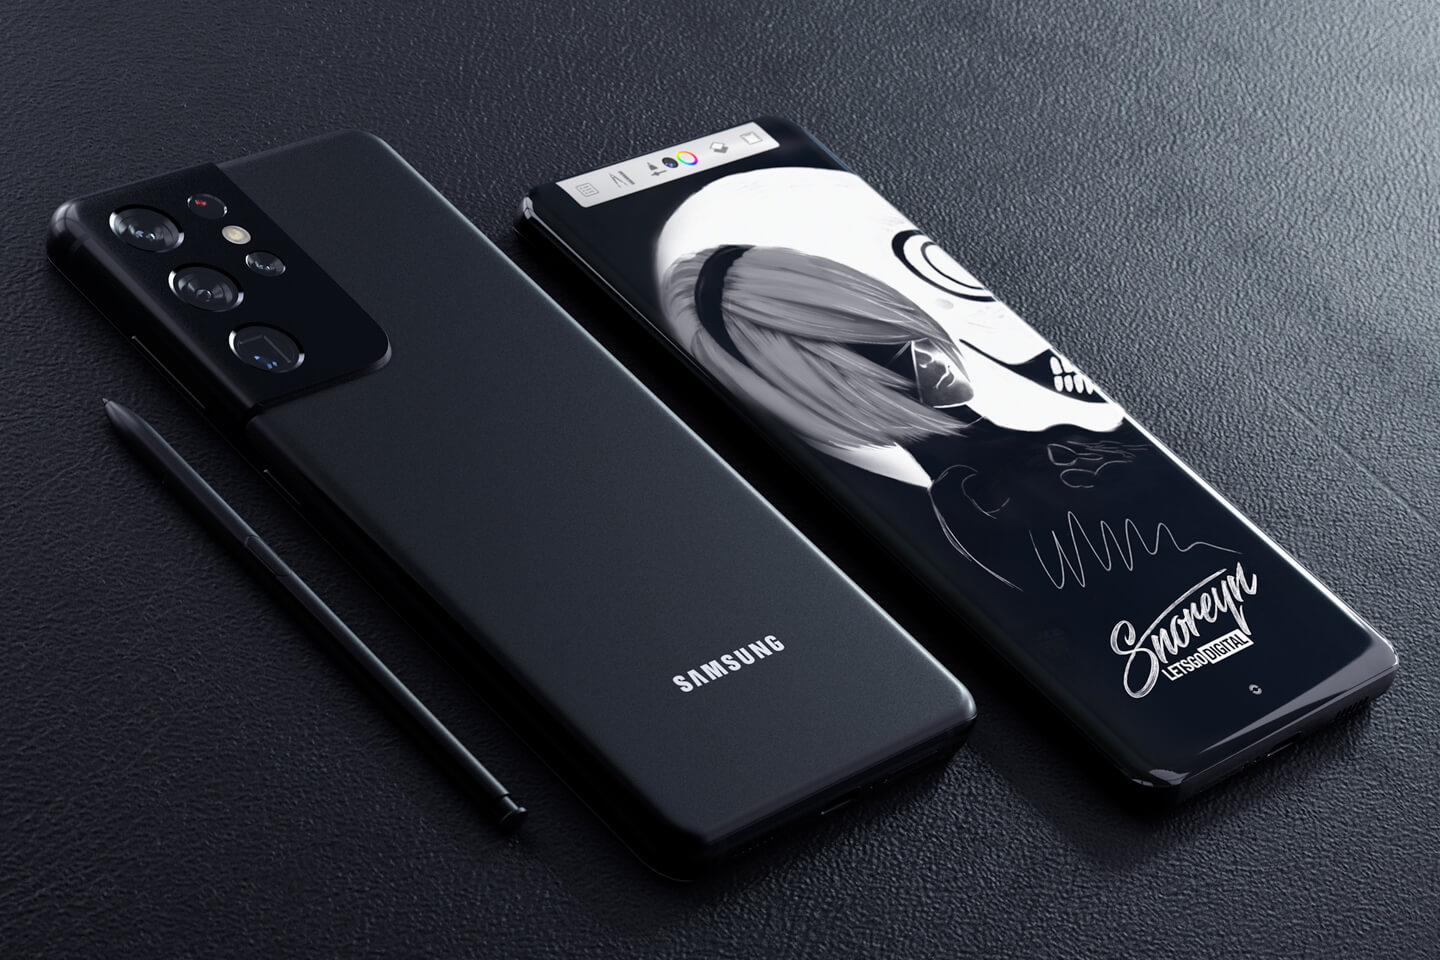 Samsung Galaxy S21 Ultra with S Pen | LetsGoDigital